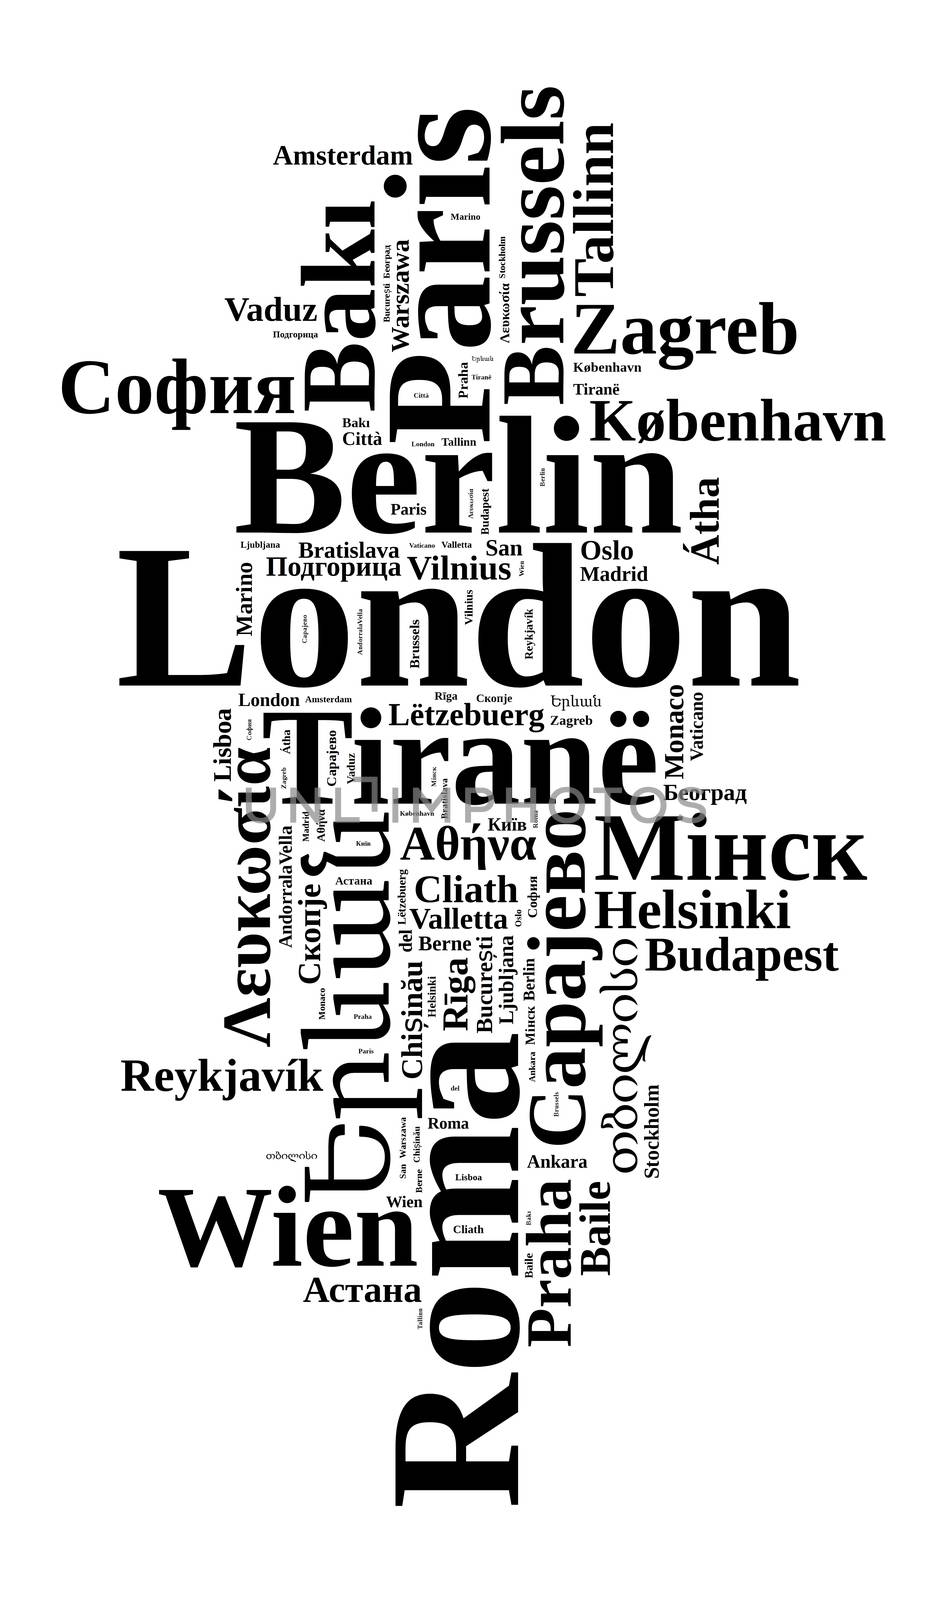 Capitals in europe word cloud concept by eenevski